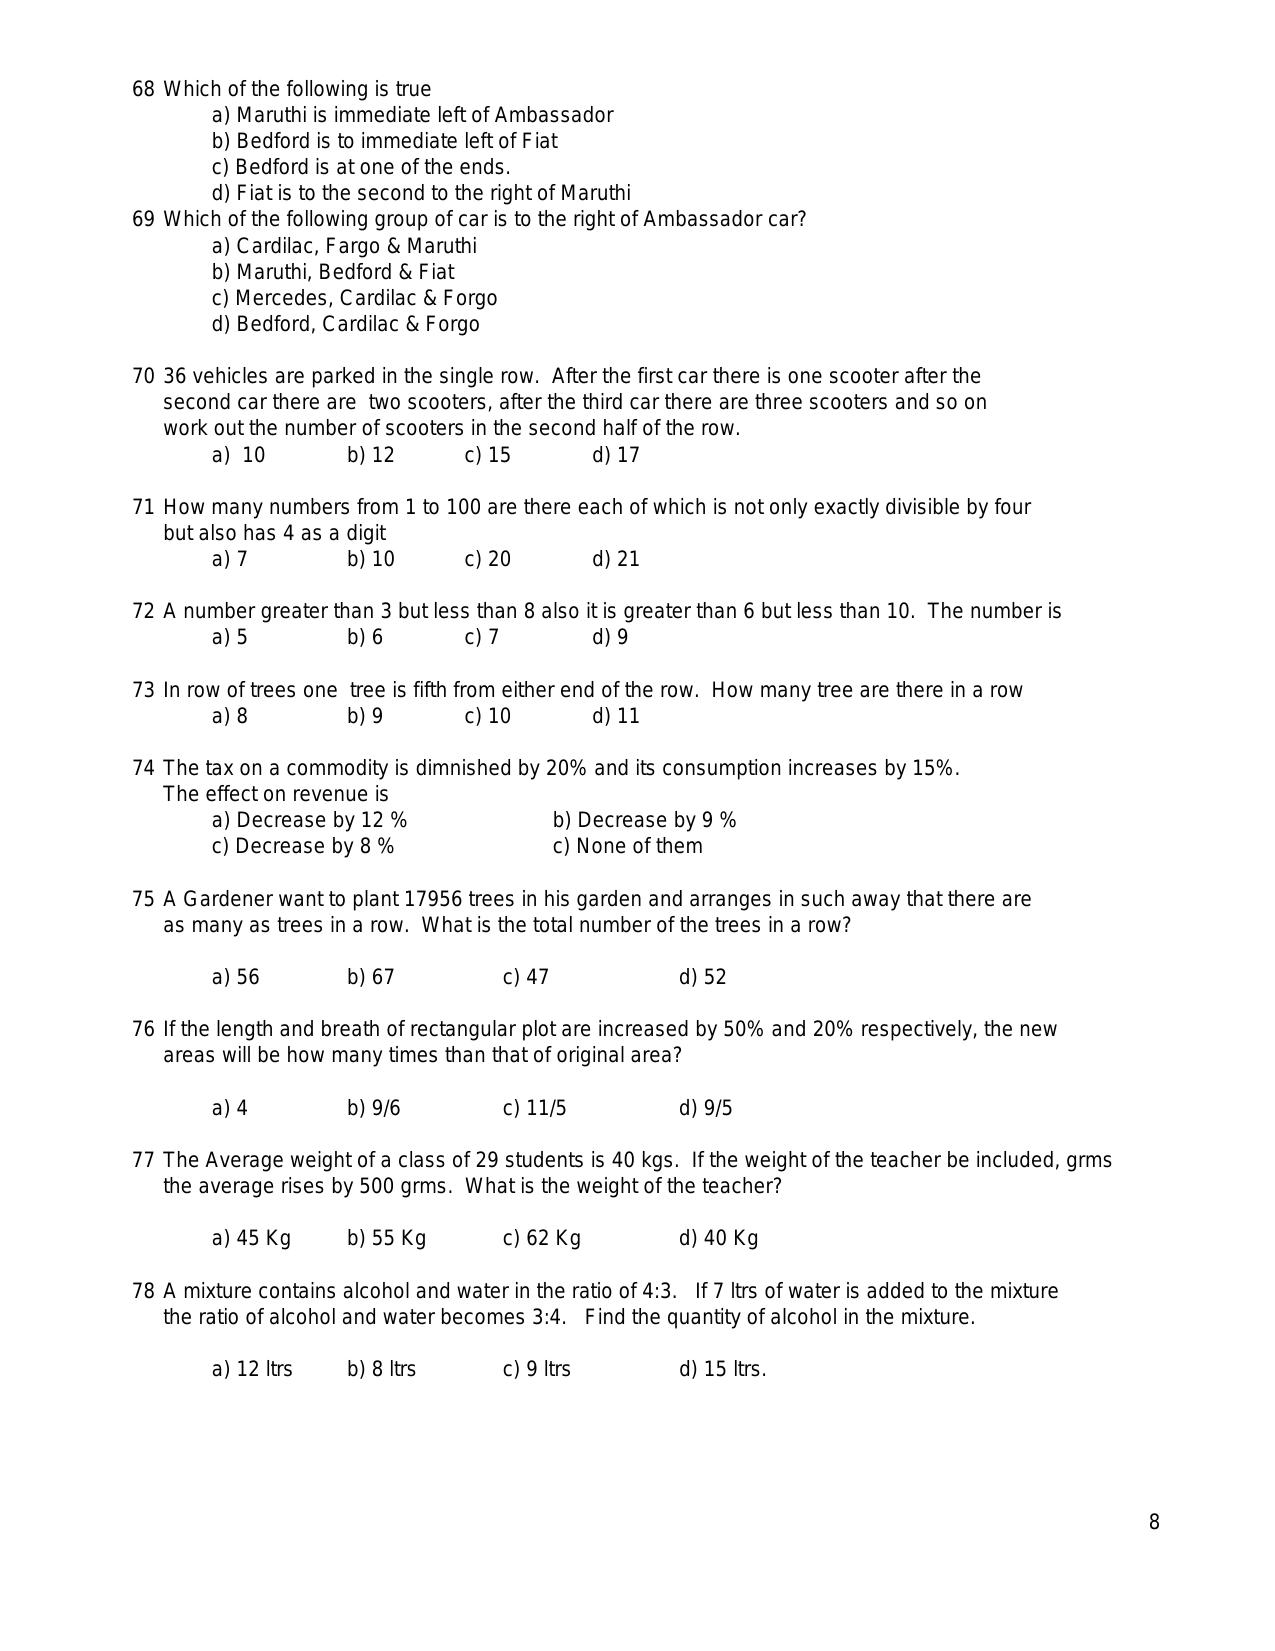 SEBI Officer Quantitative Aptitude Sample Paper - Page 8